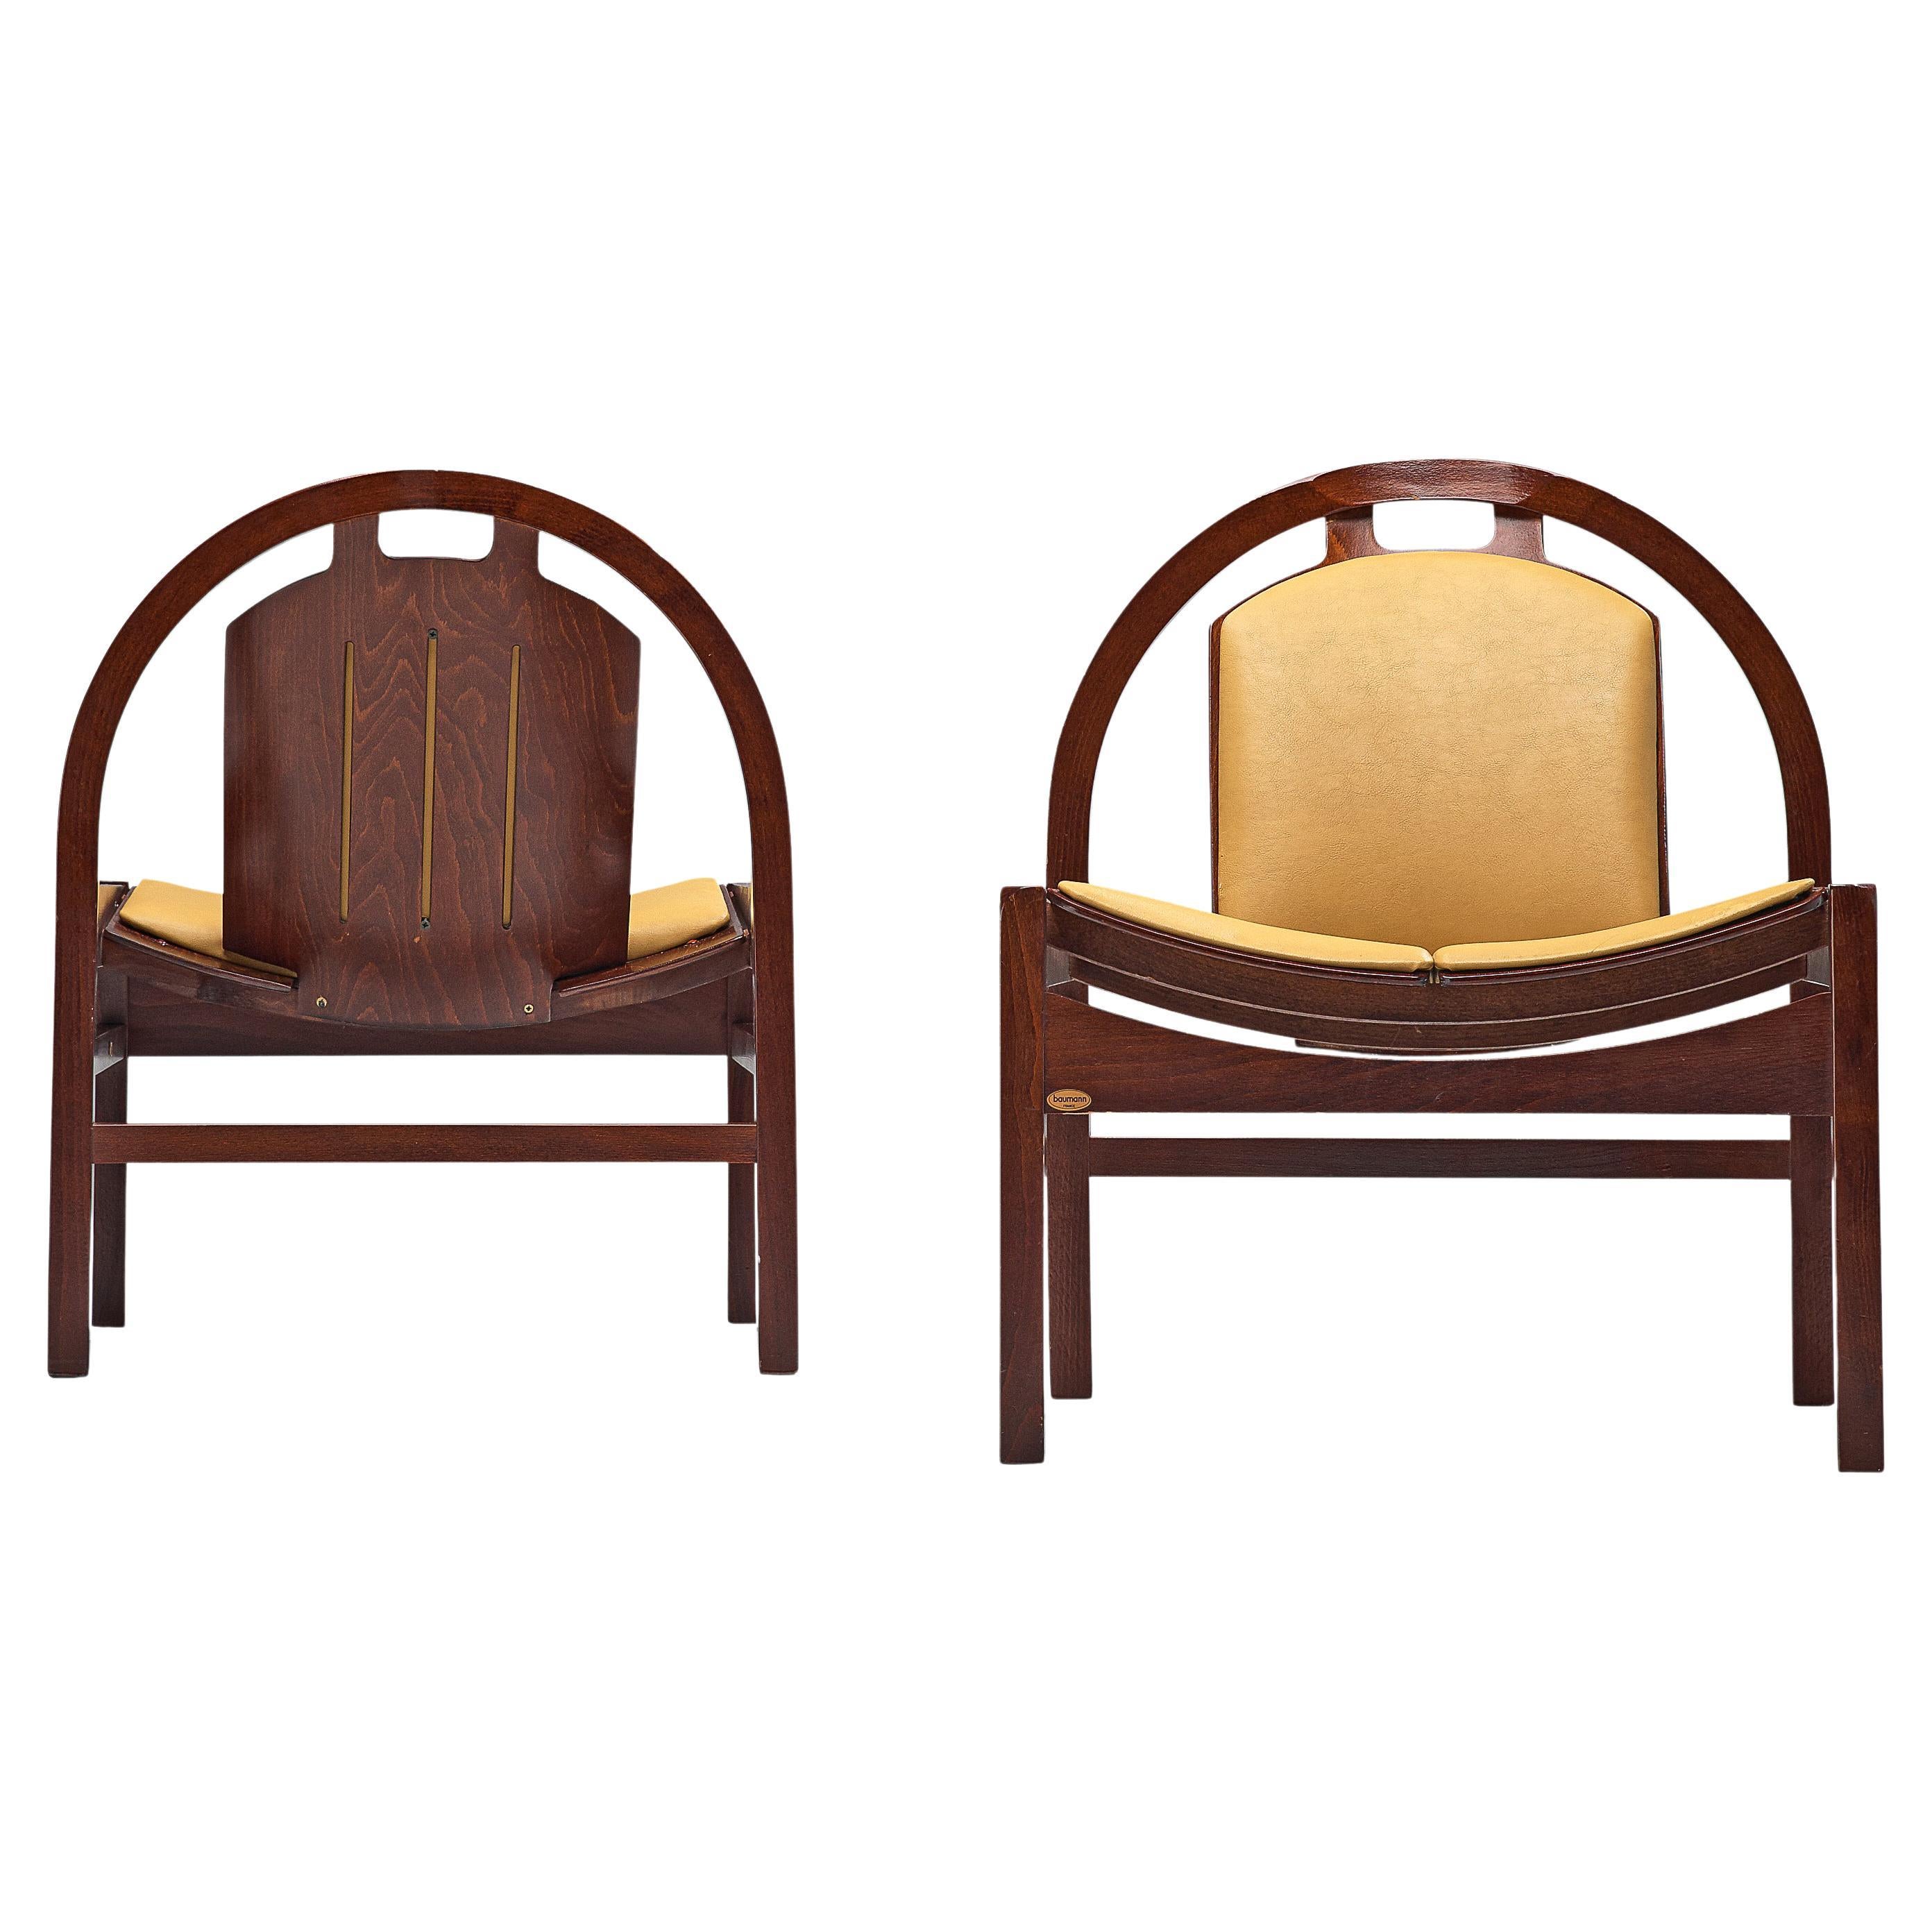 Baumann 'Argos' Lounge Chairs in Leather